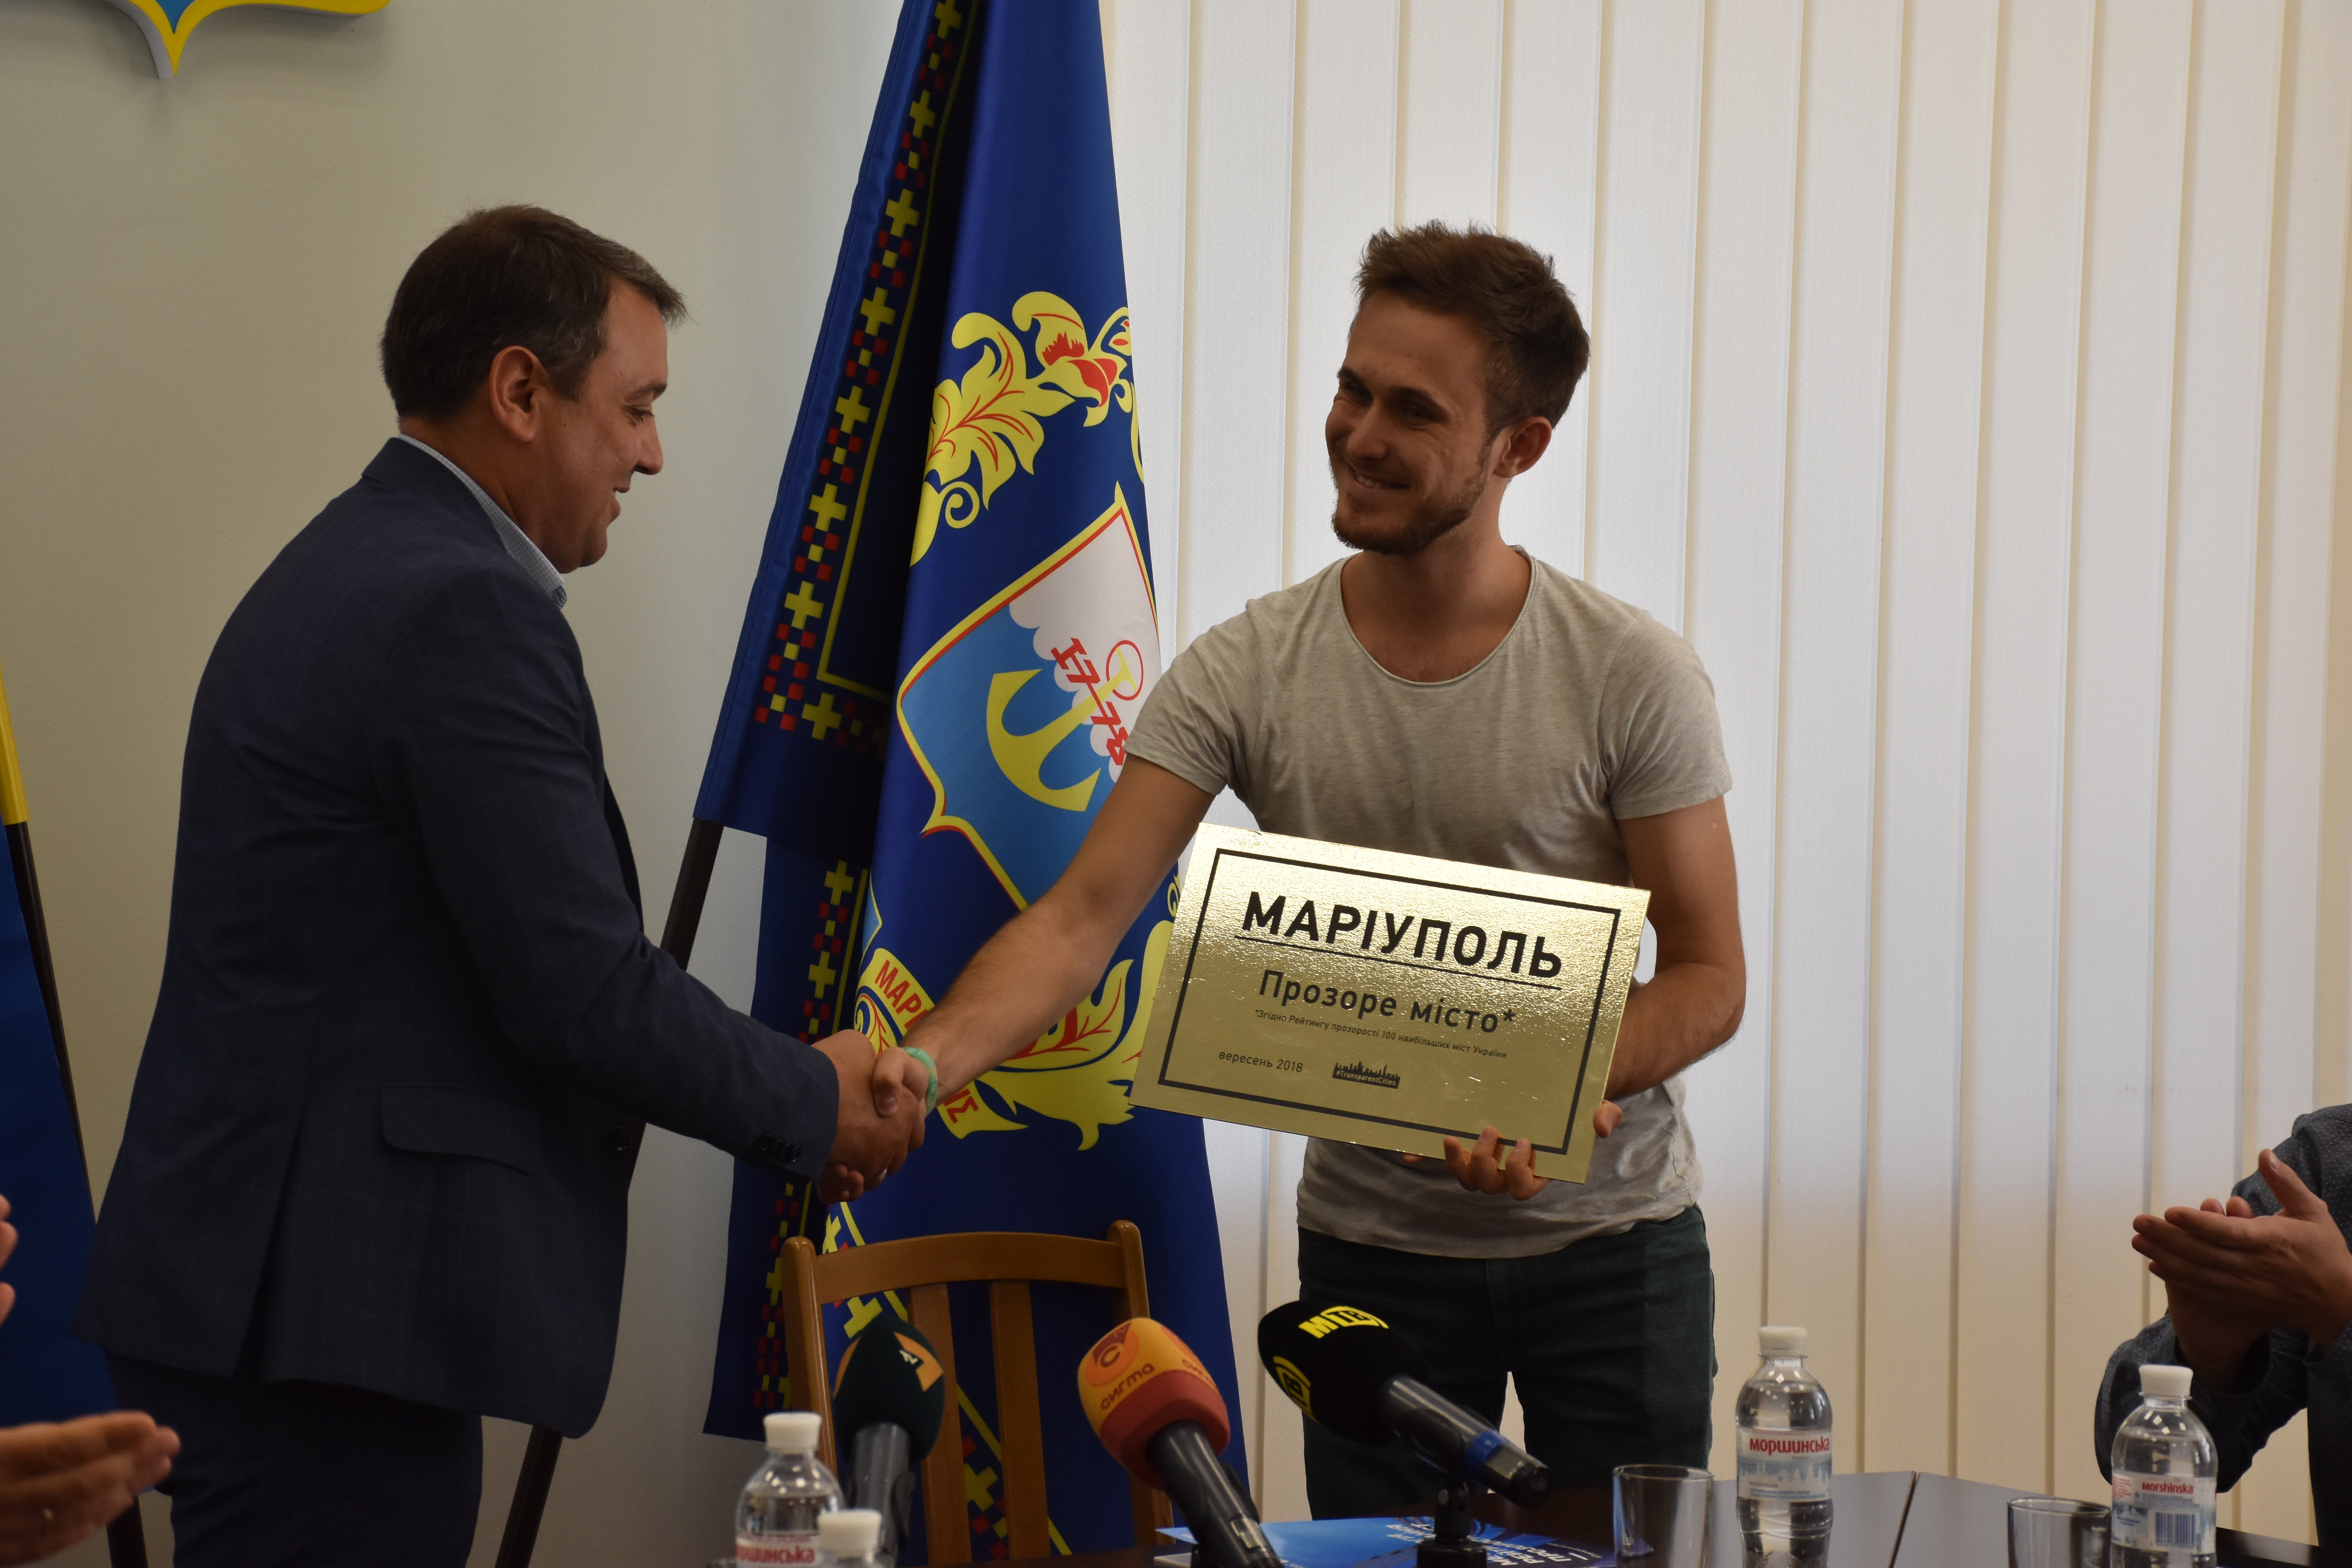 Mariupol became the ‘most transparent’ city of Ukraine